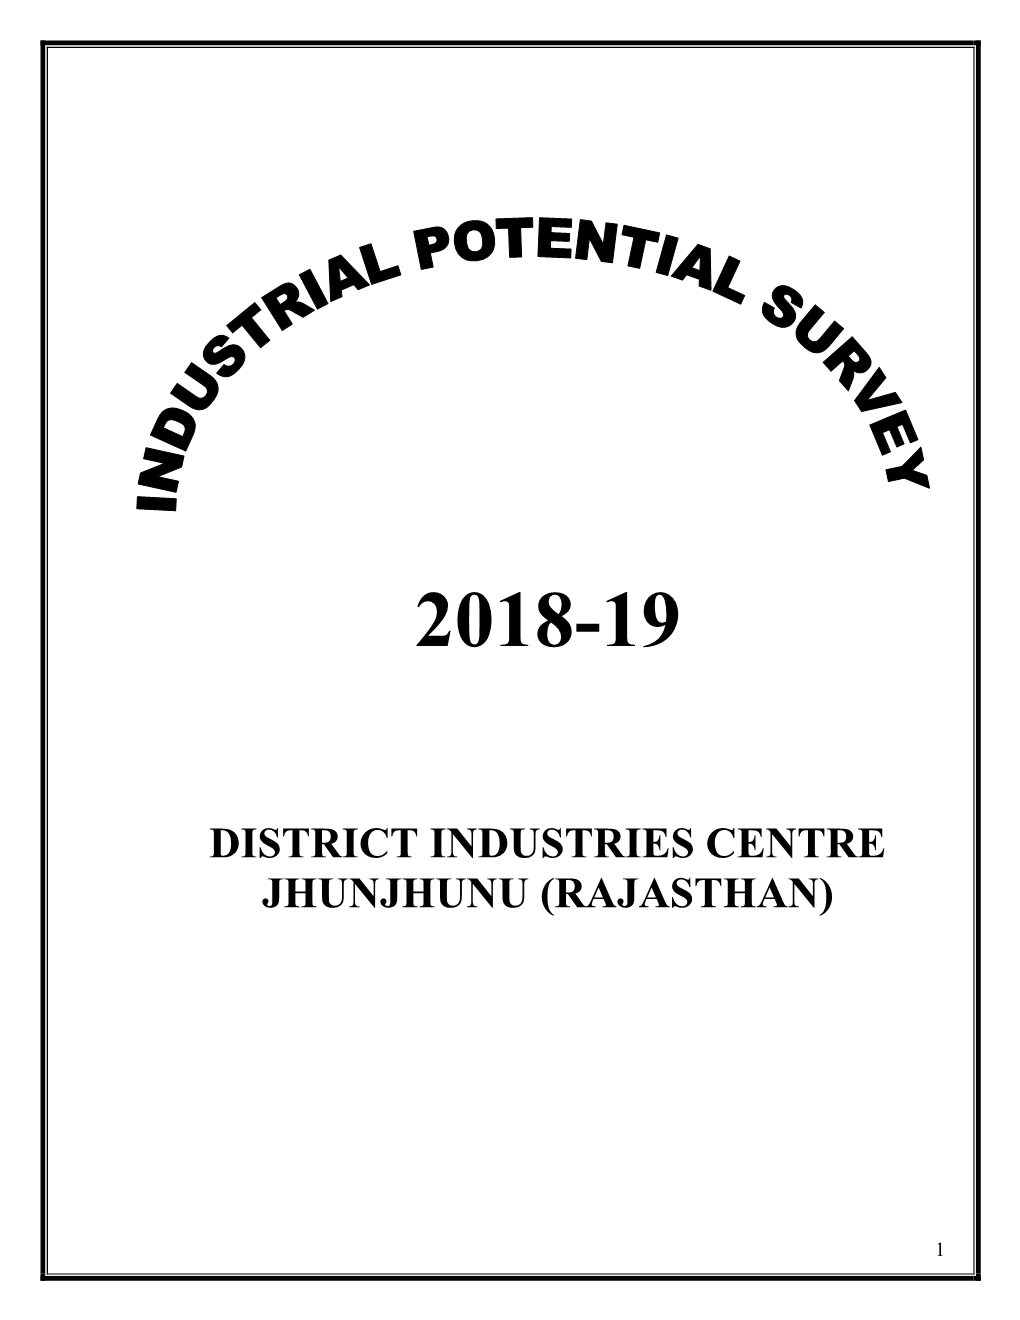 District Industries Centre Jhunjhunu (Rajasthan)